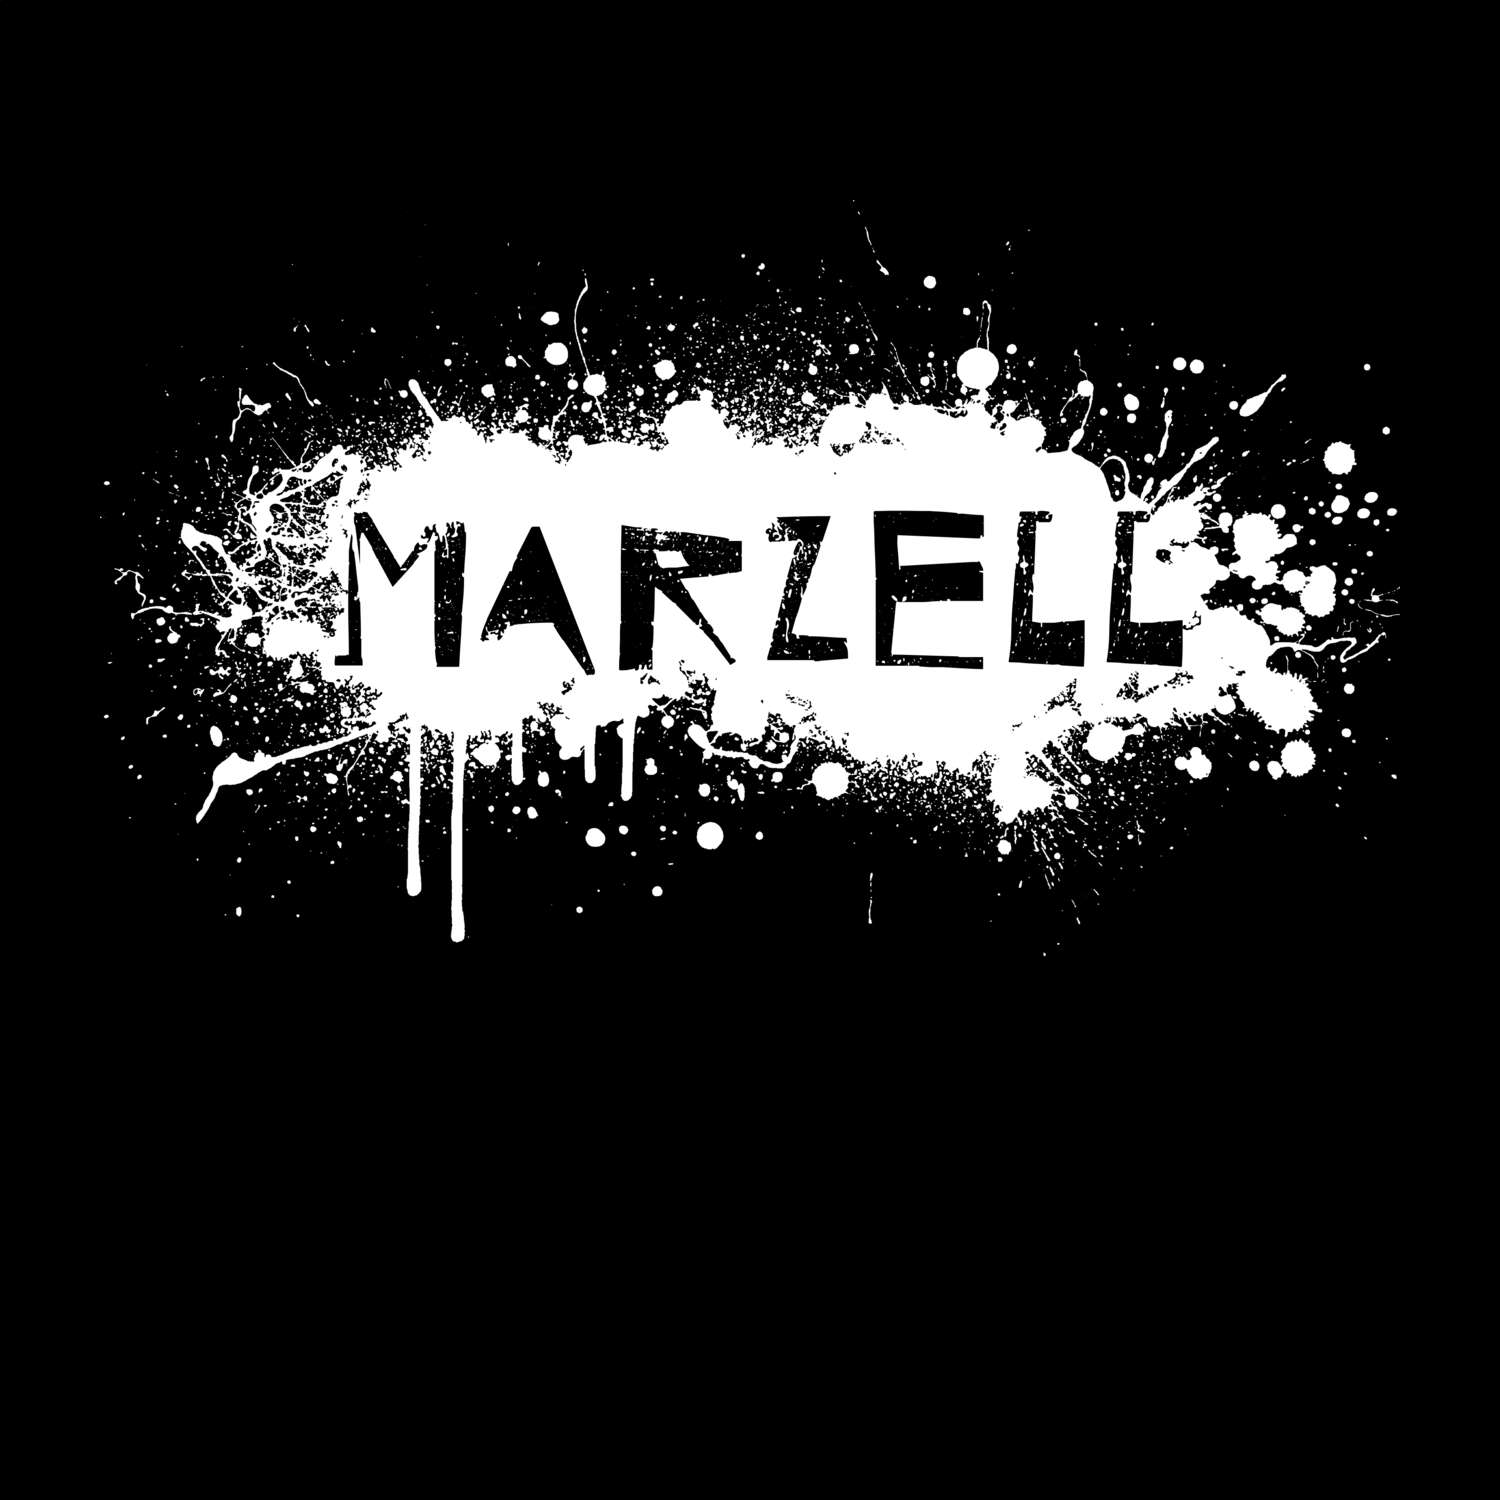 Marzell T-Shirt »Paint Splash Punk«